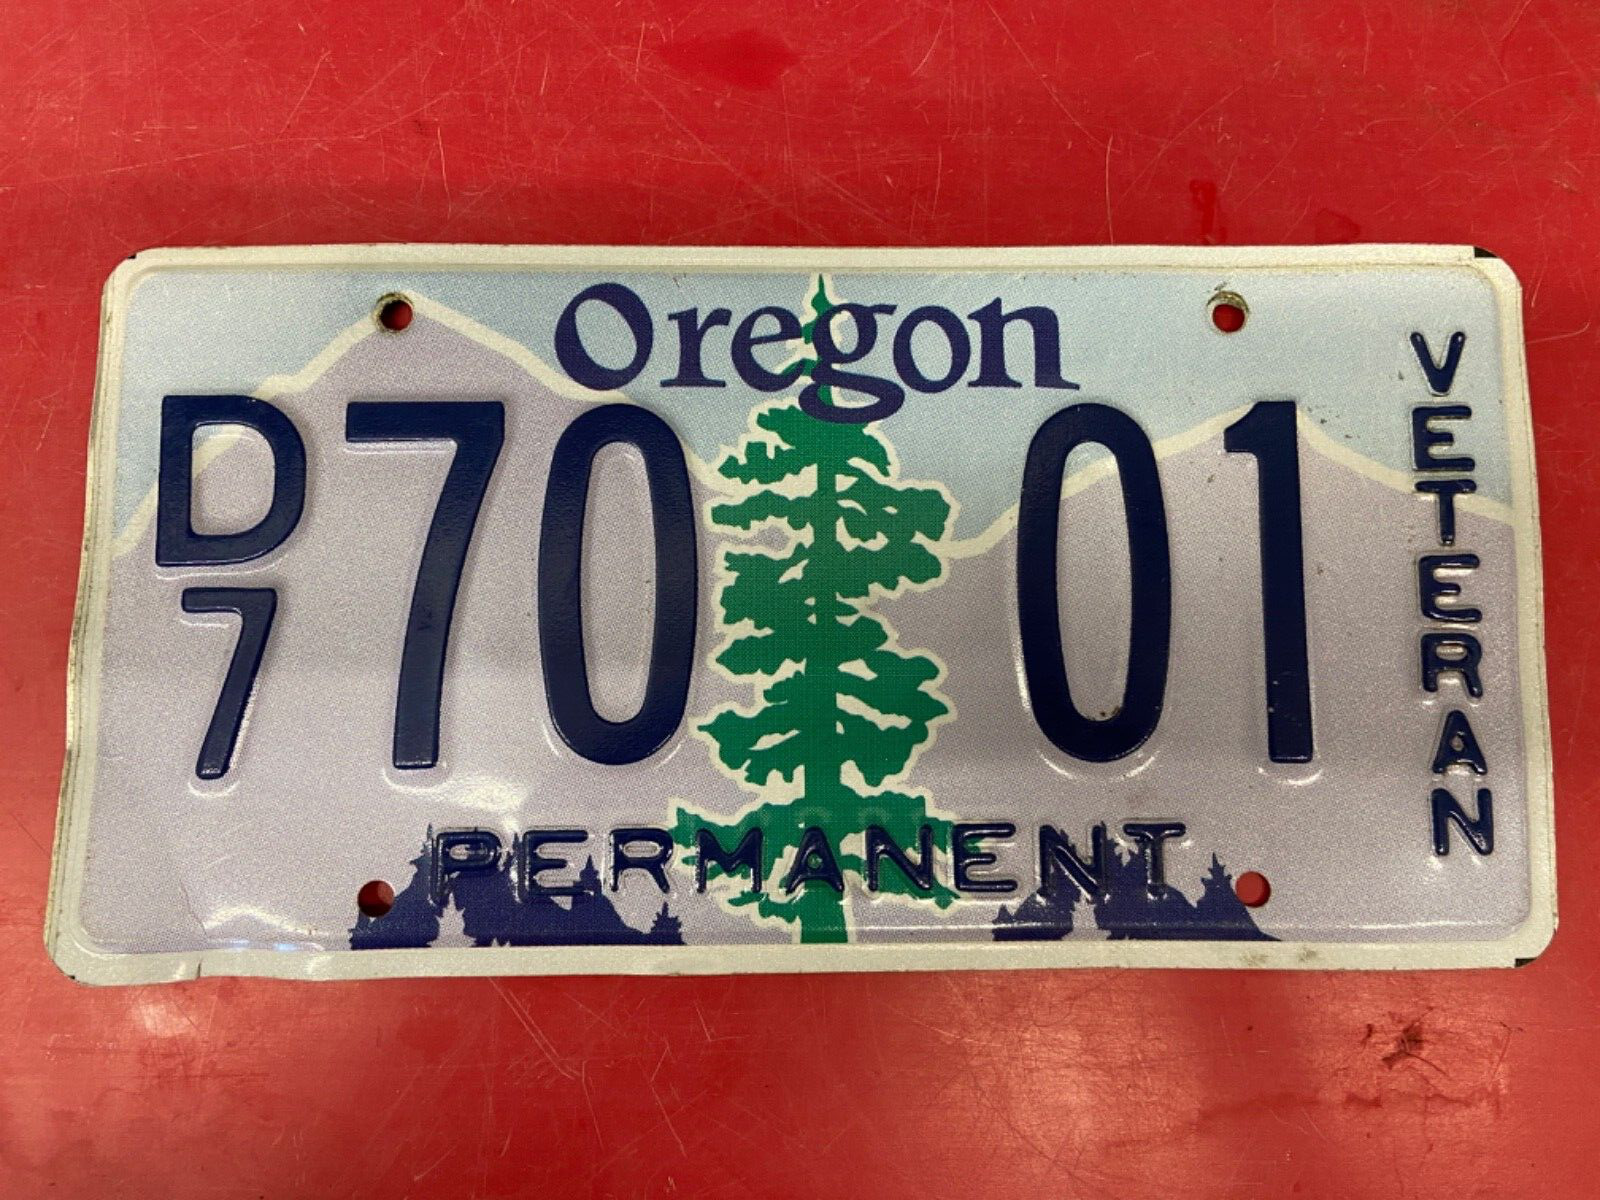 Vintage License Plate Oregon D7 7001 disabled veteran expired